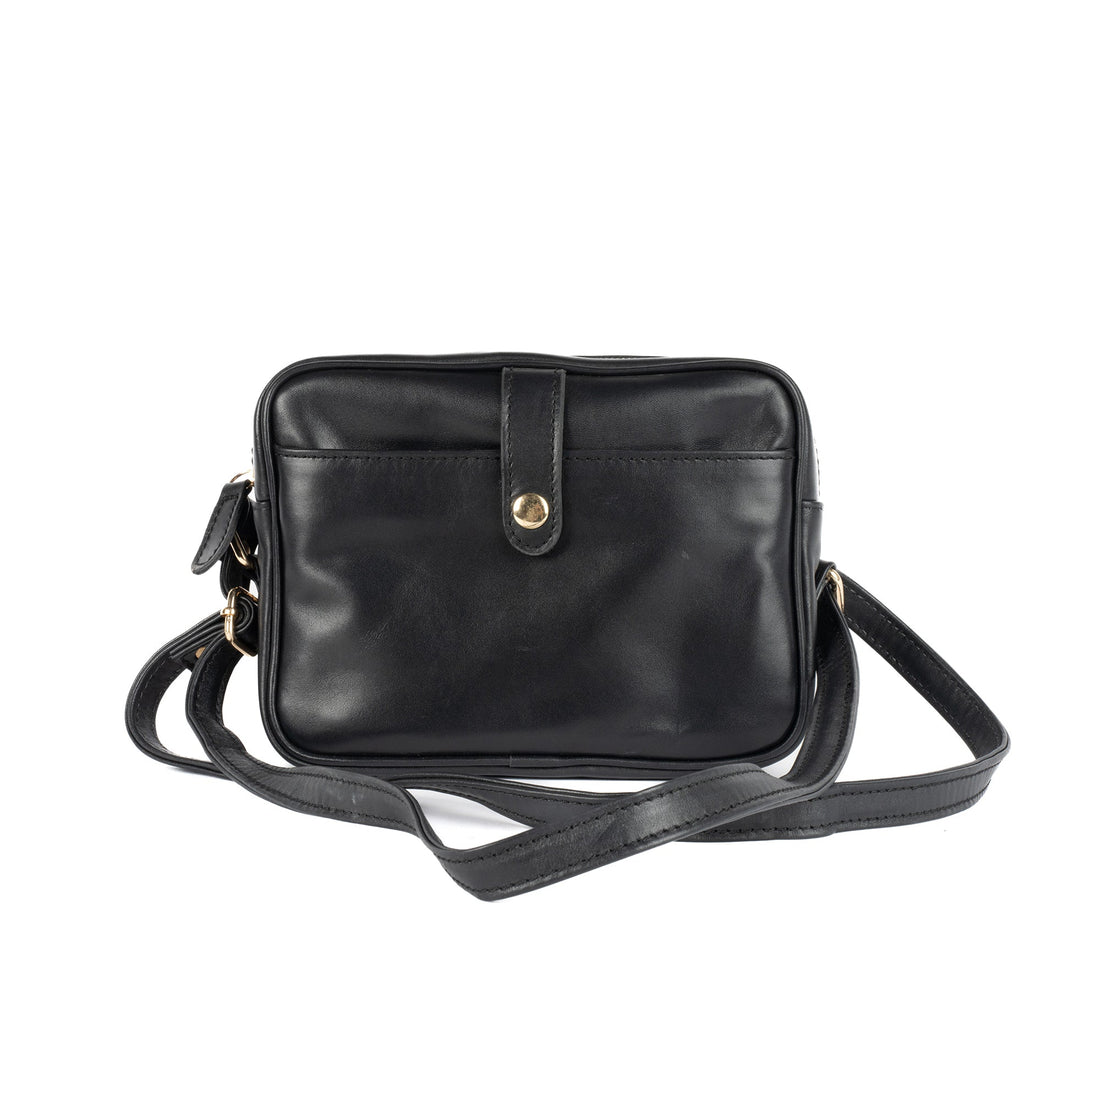 Corydala Leather Crossbody Bag - Black - Bags Zengoda Shop online from Artisan Brands